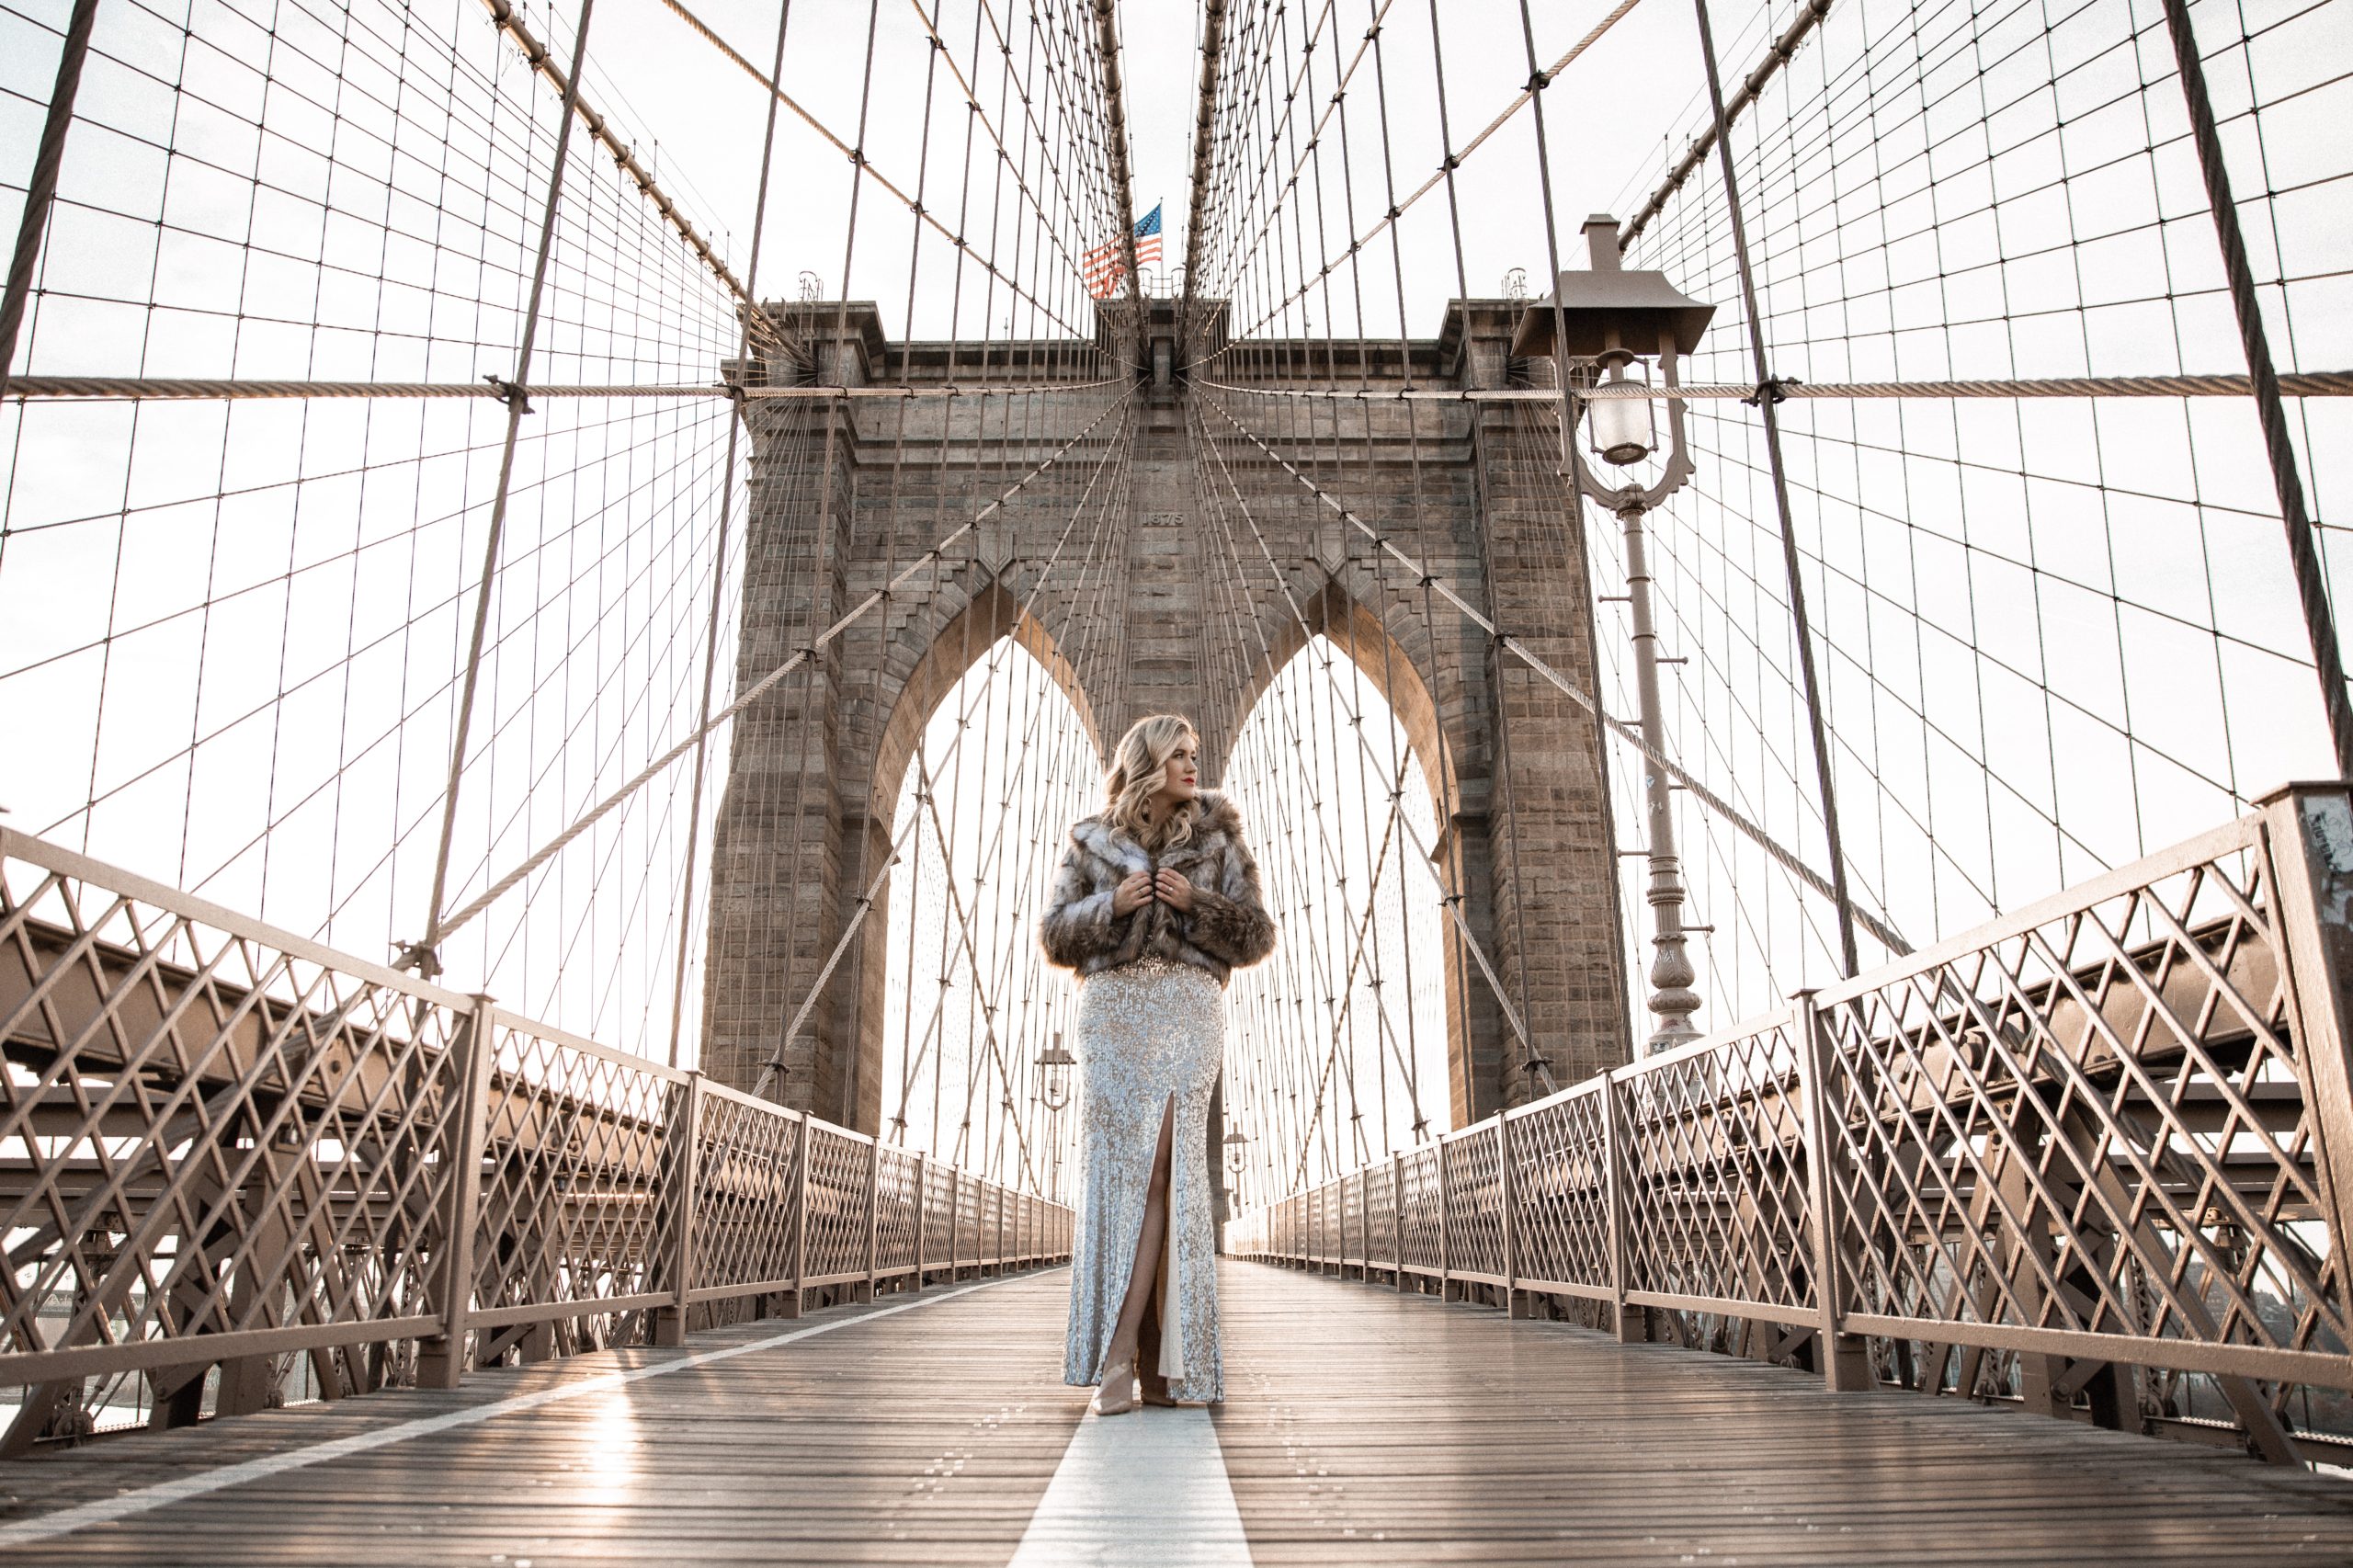 Anna standing on the Brooklyn Bridge.